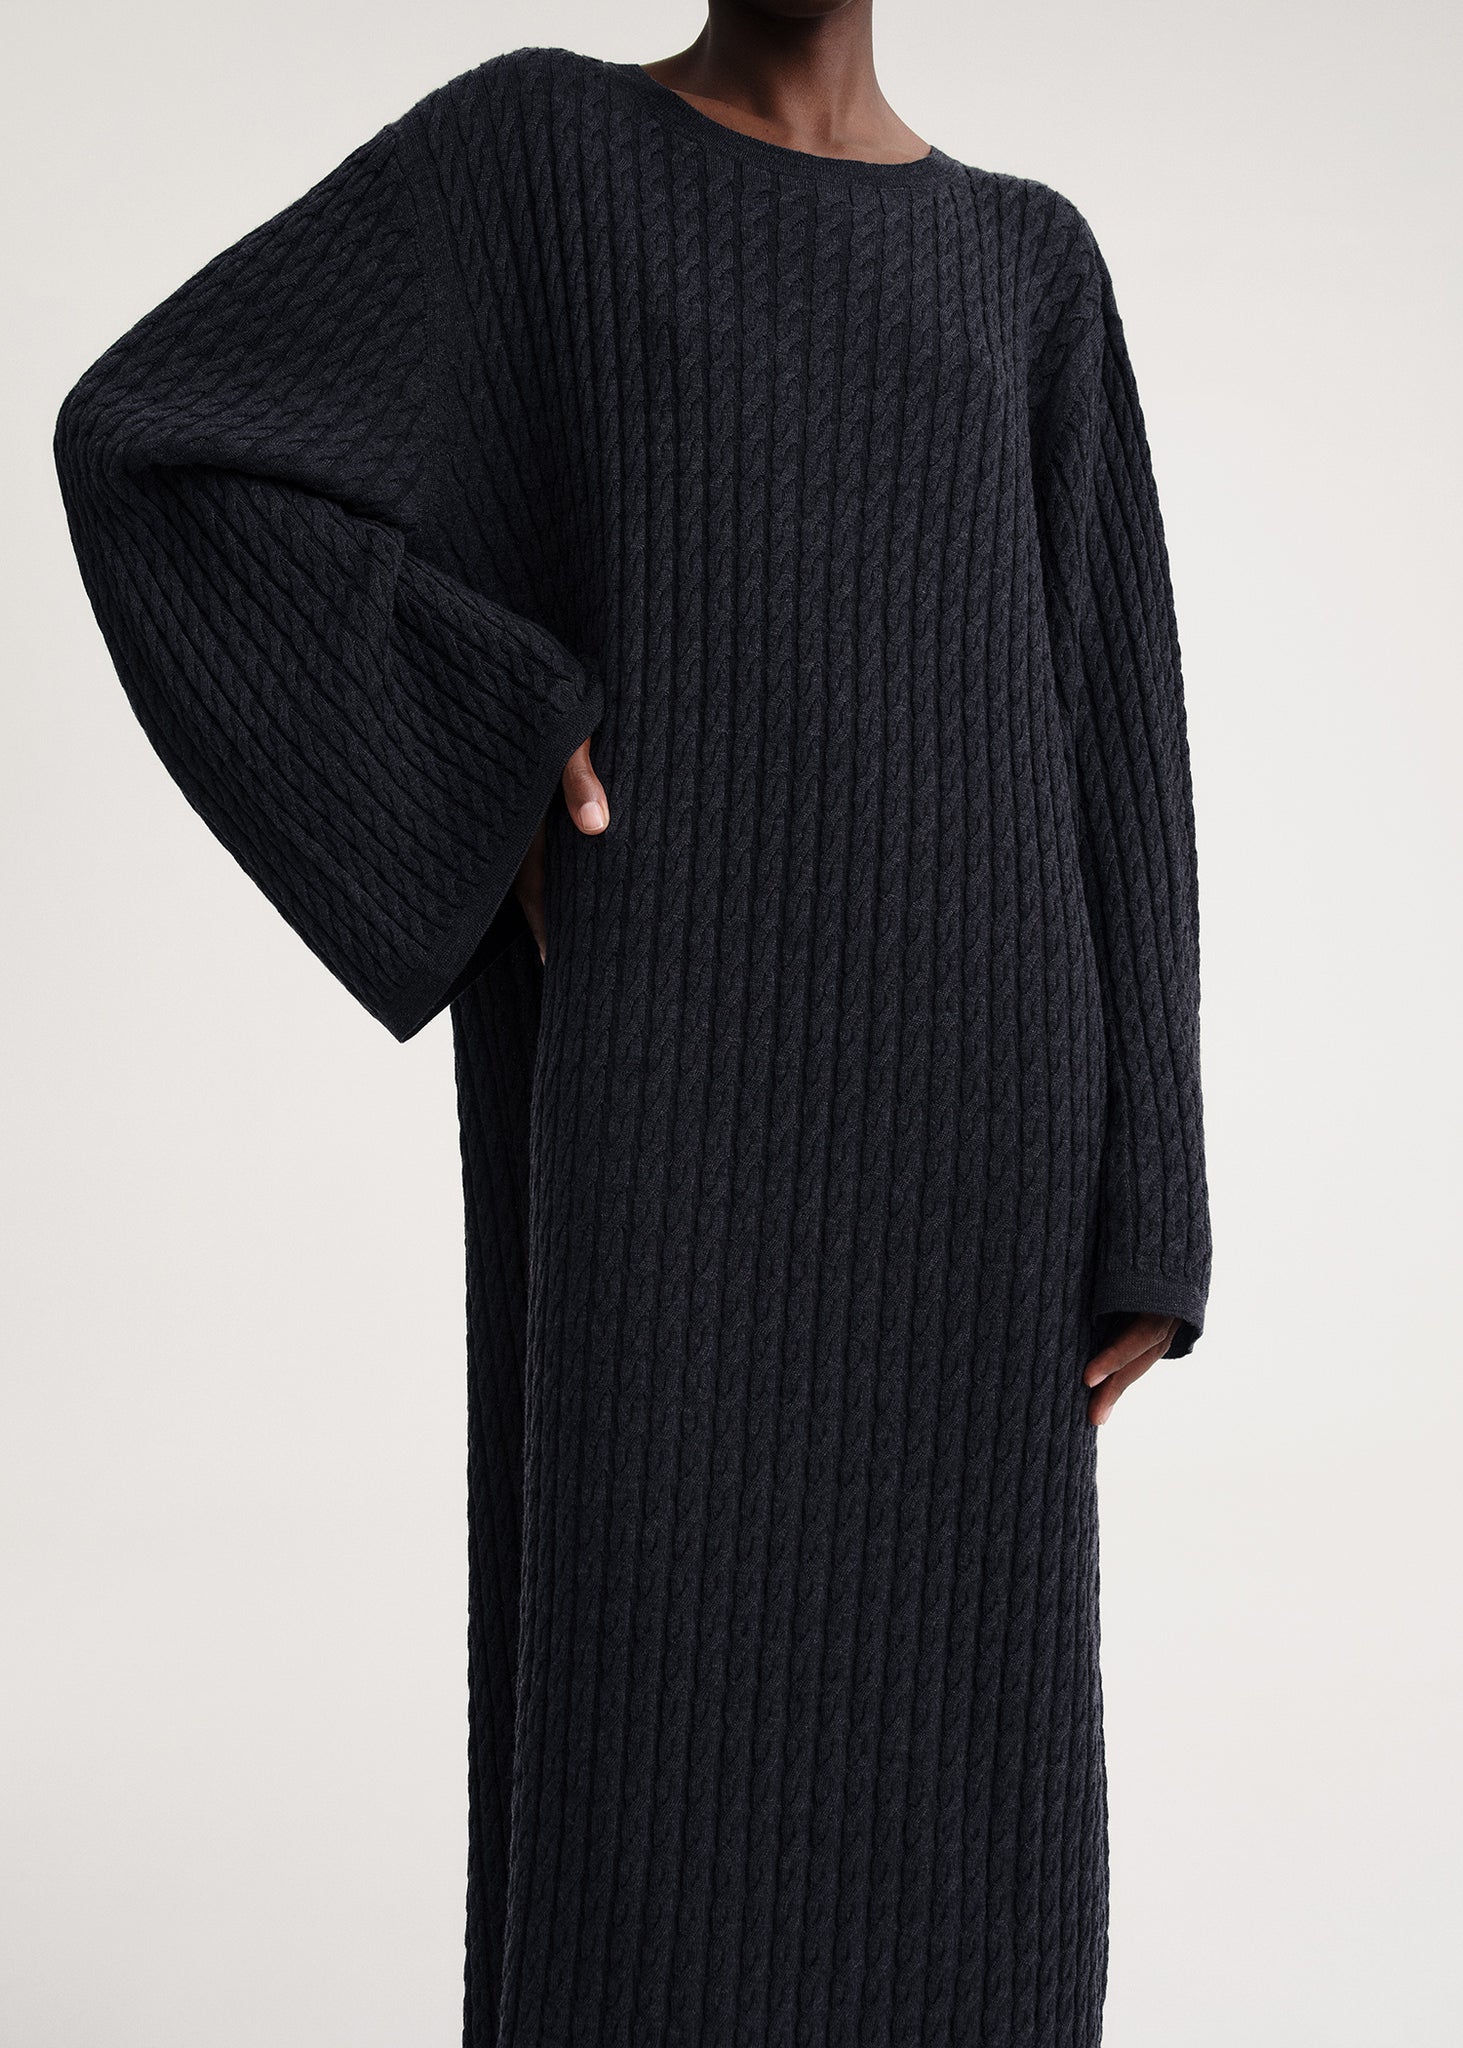 Cable knit dress dark grey mélange